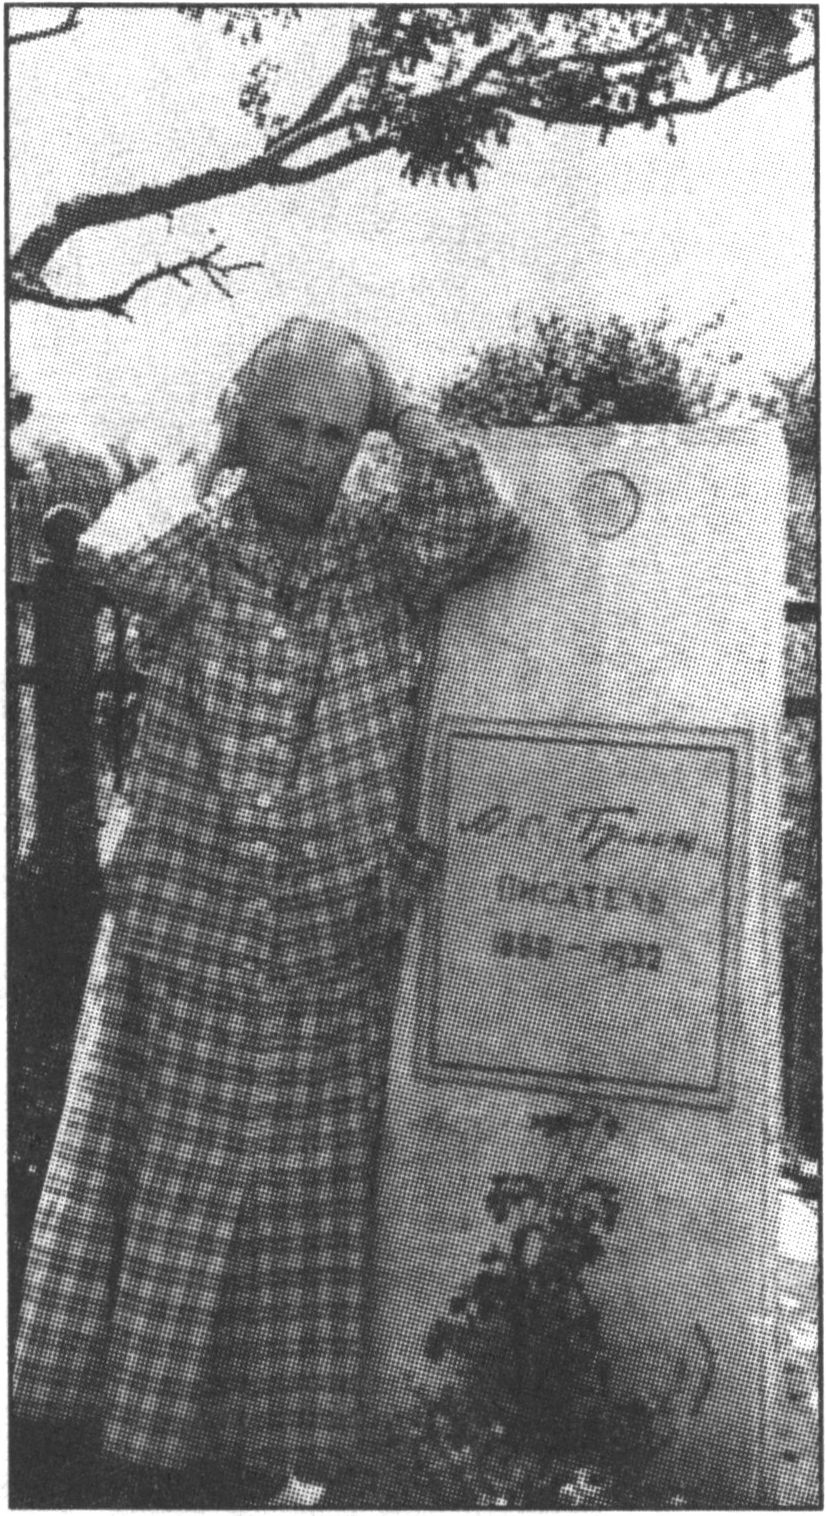  Н.Н. Грин у могилы А.С. Грина. Фото 1958года